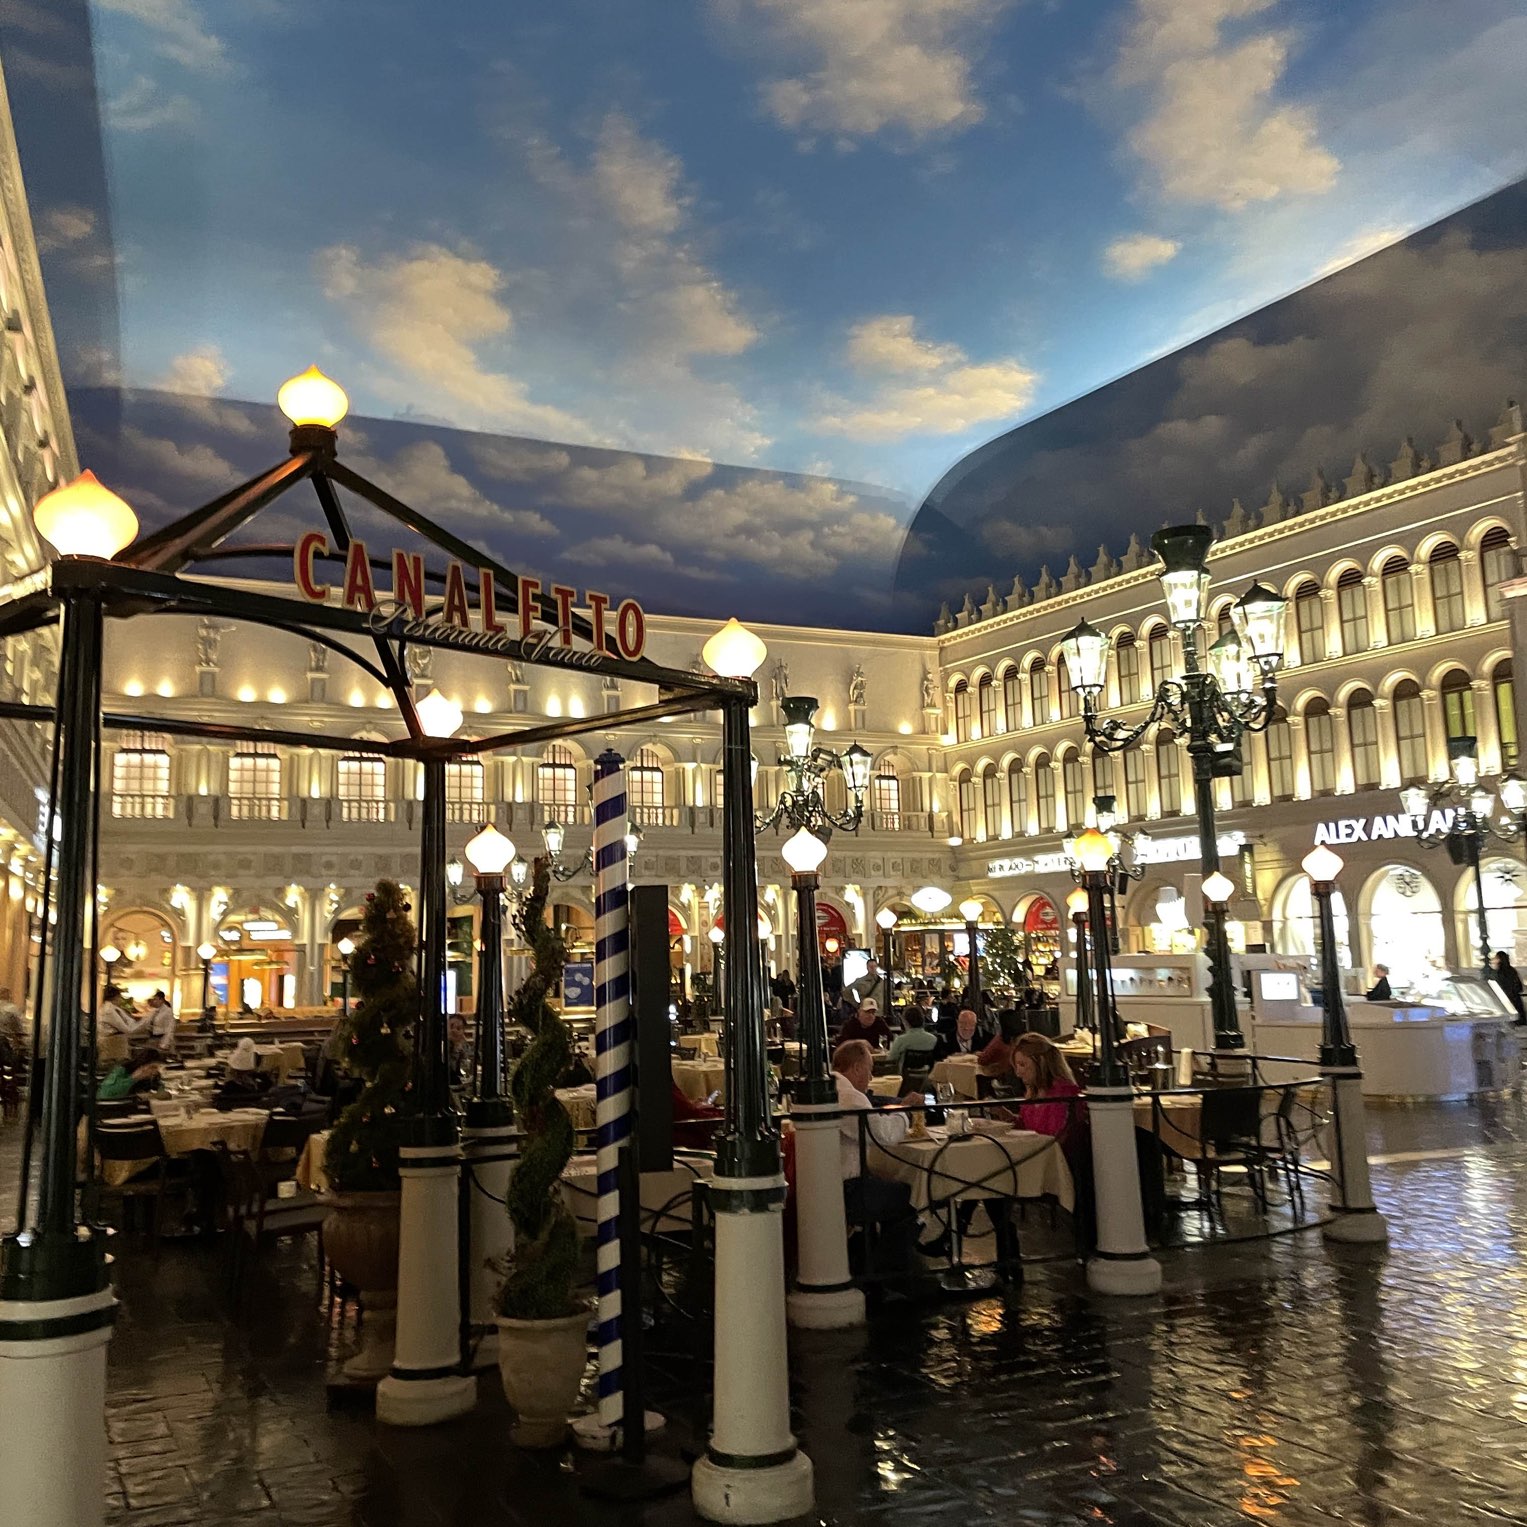 The Venetian Las Vegas - Visit an Impressive Replica of Italy - Go